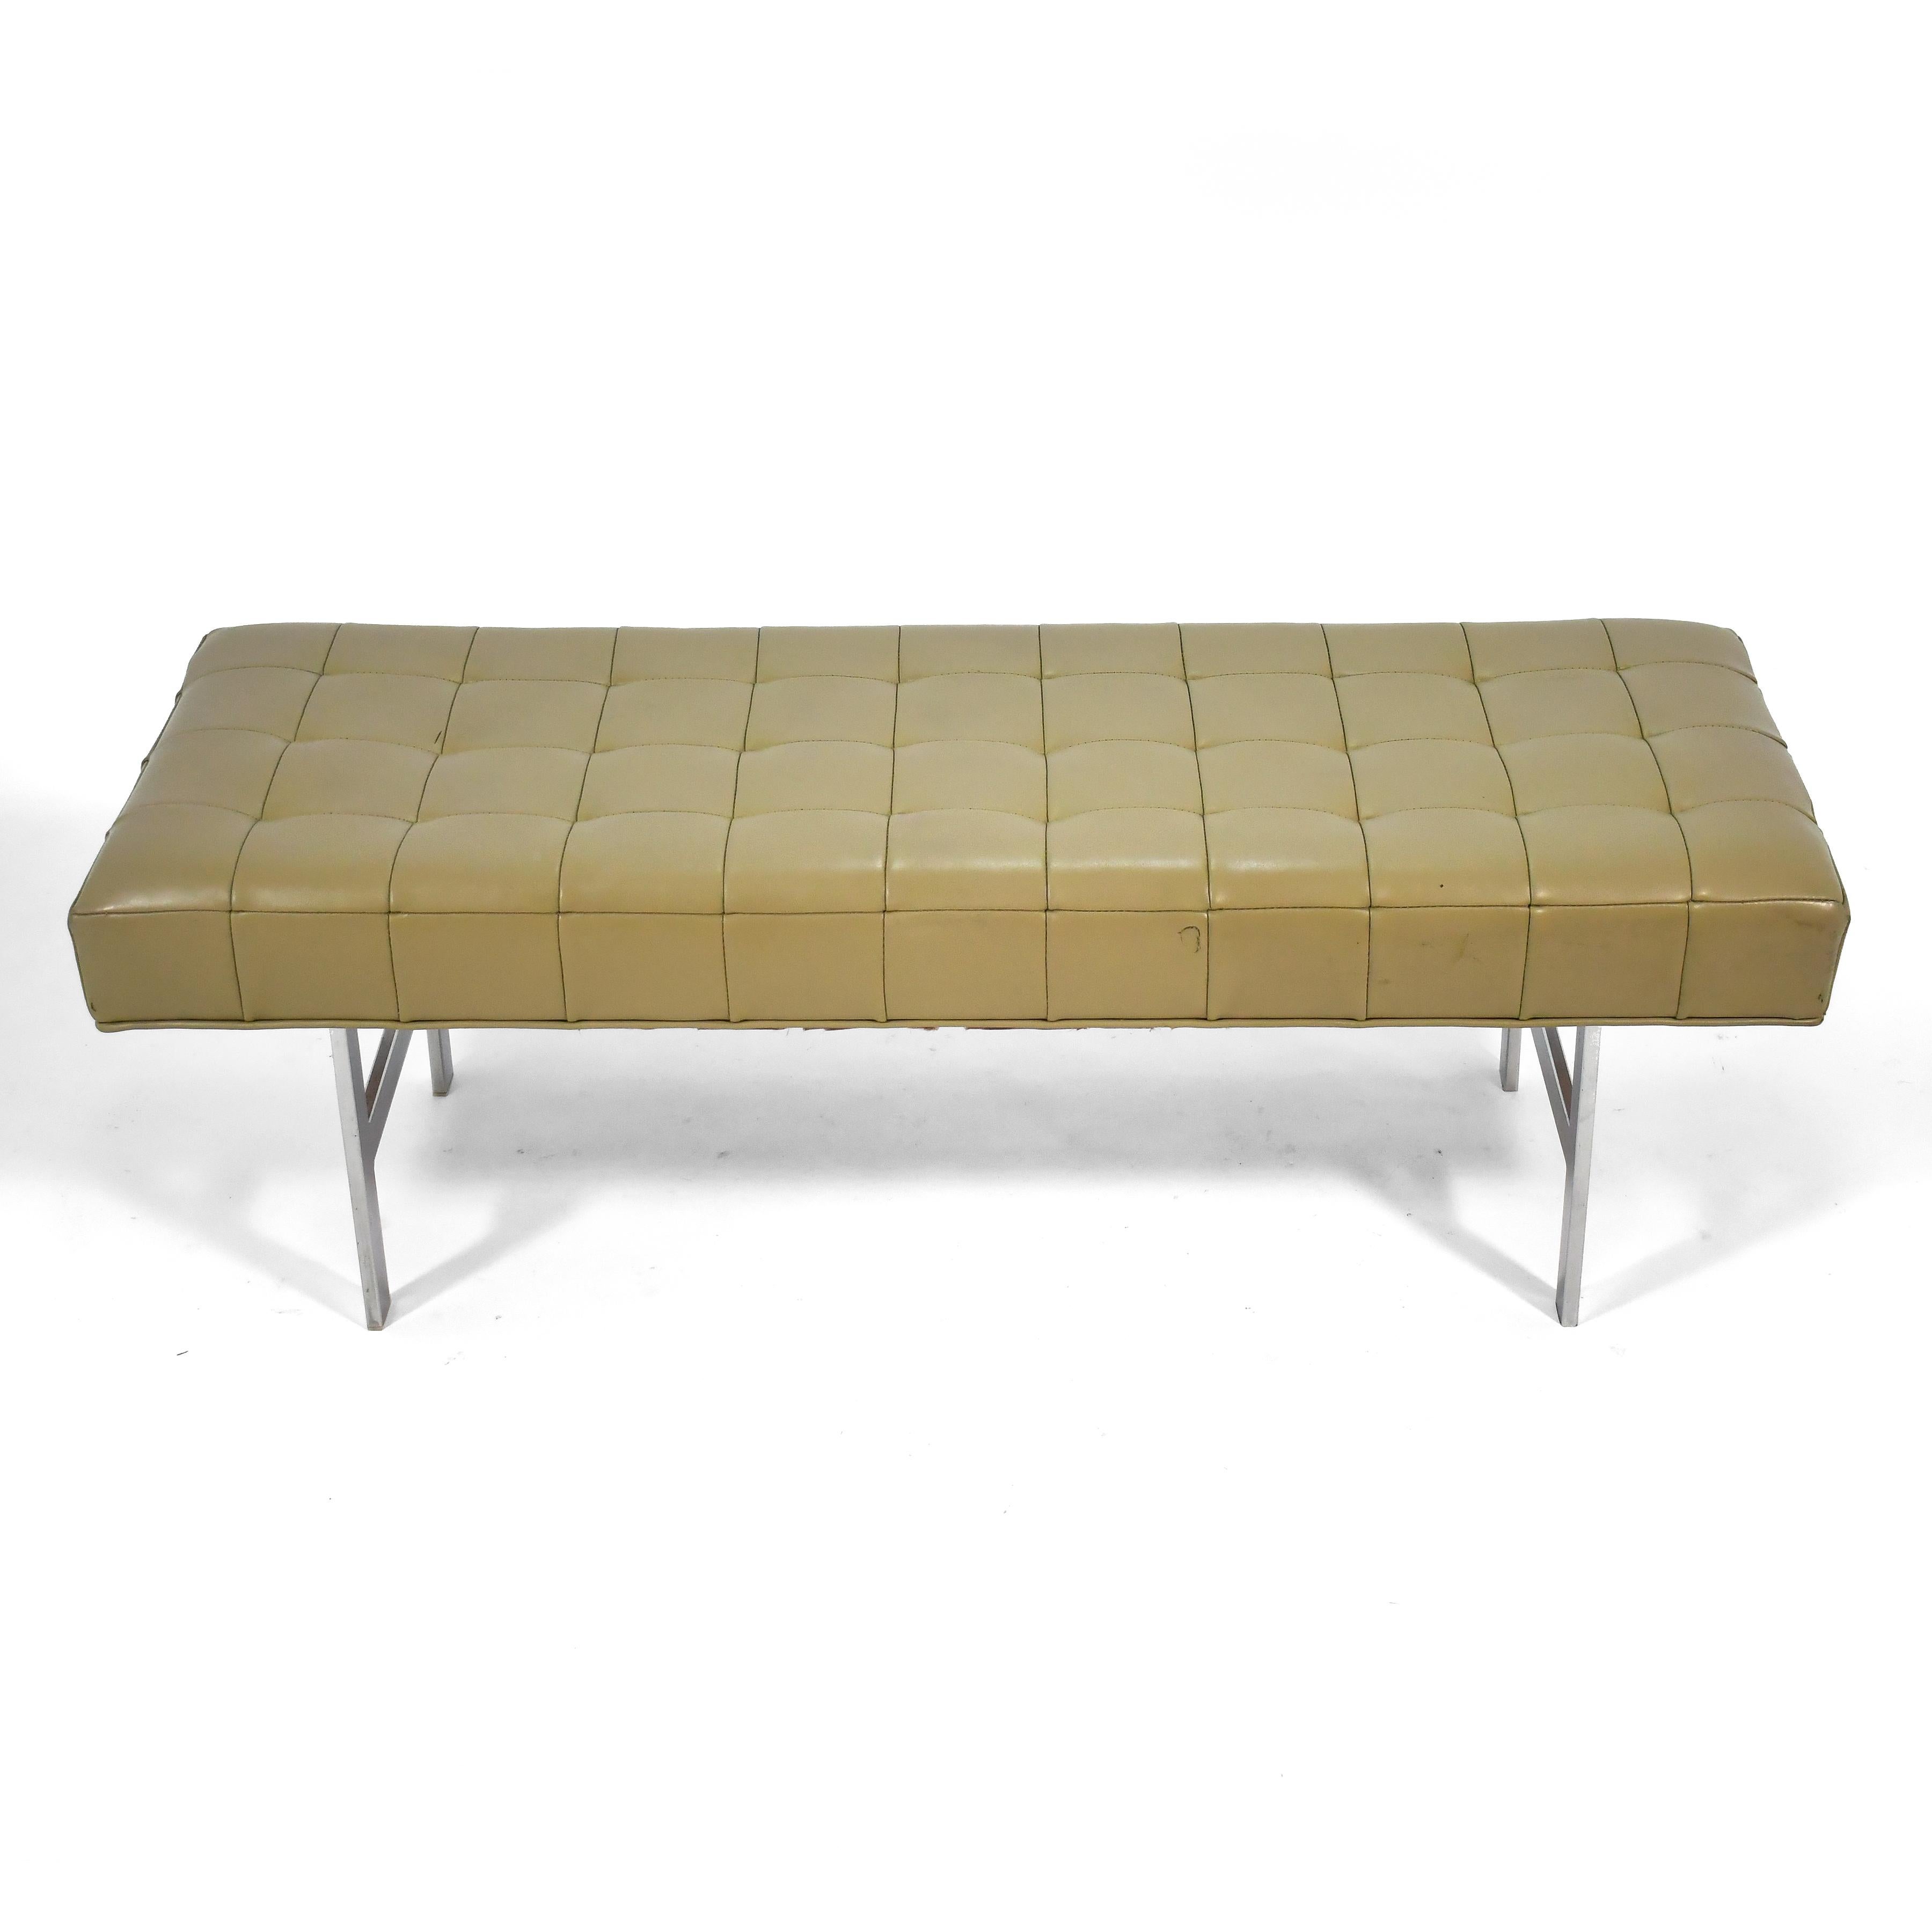 Steel Mid-Century Modern Upholstered Bench For Sale